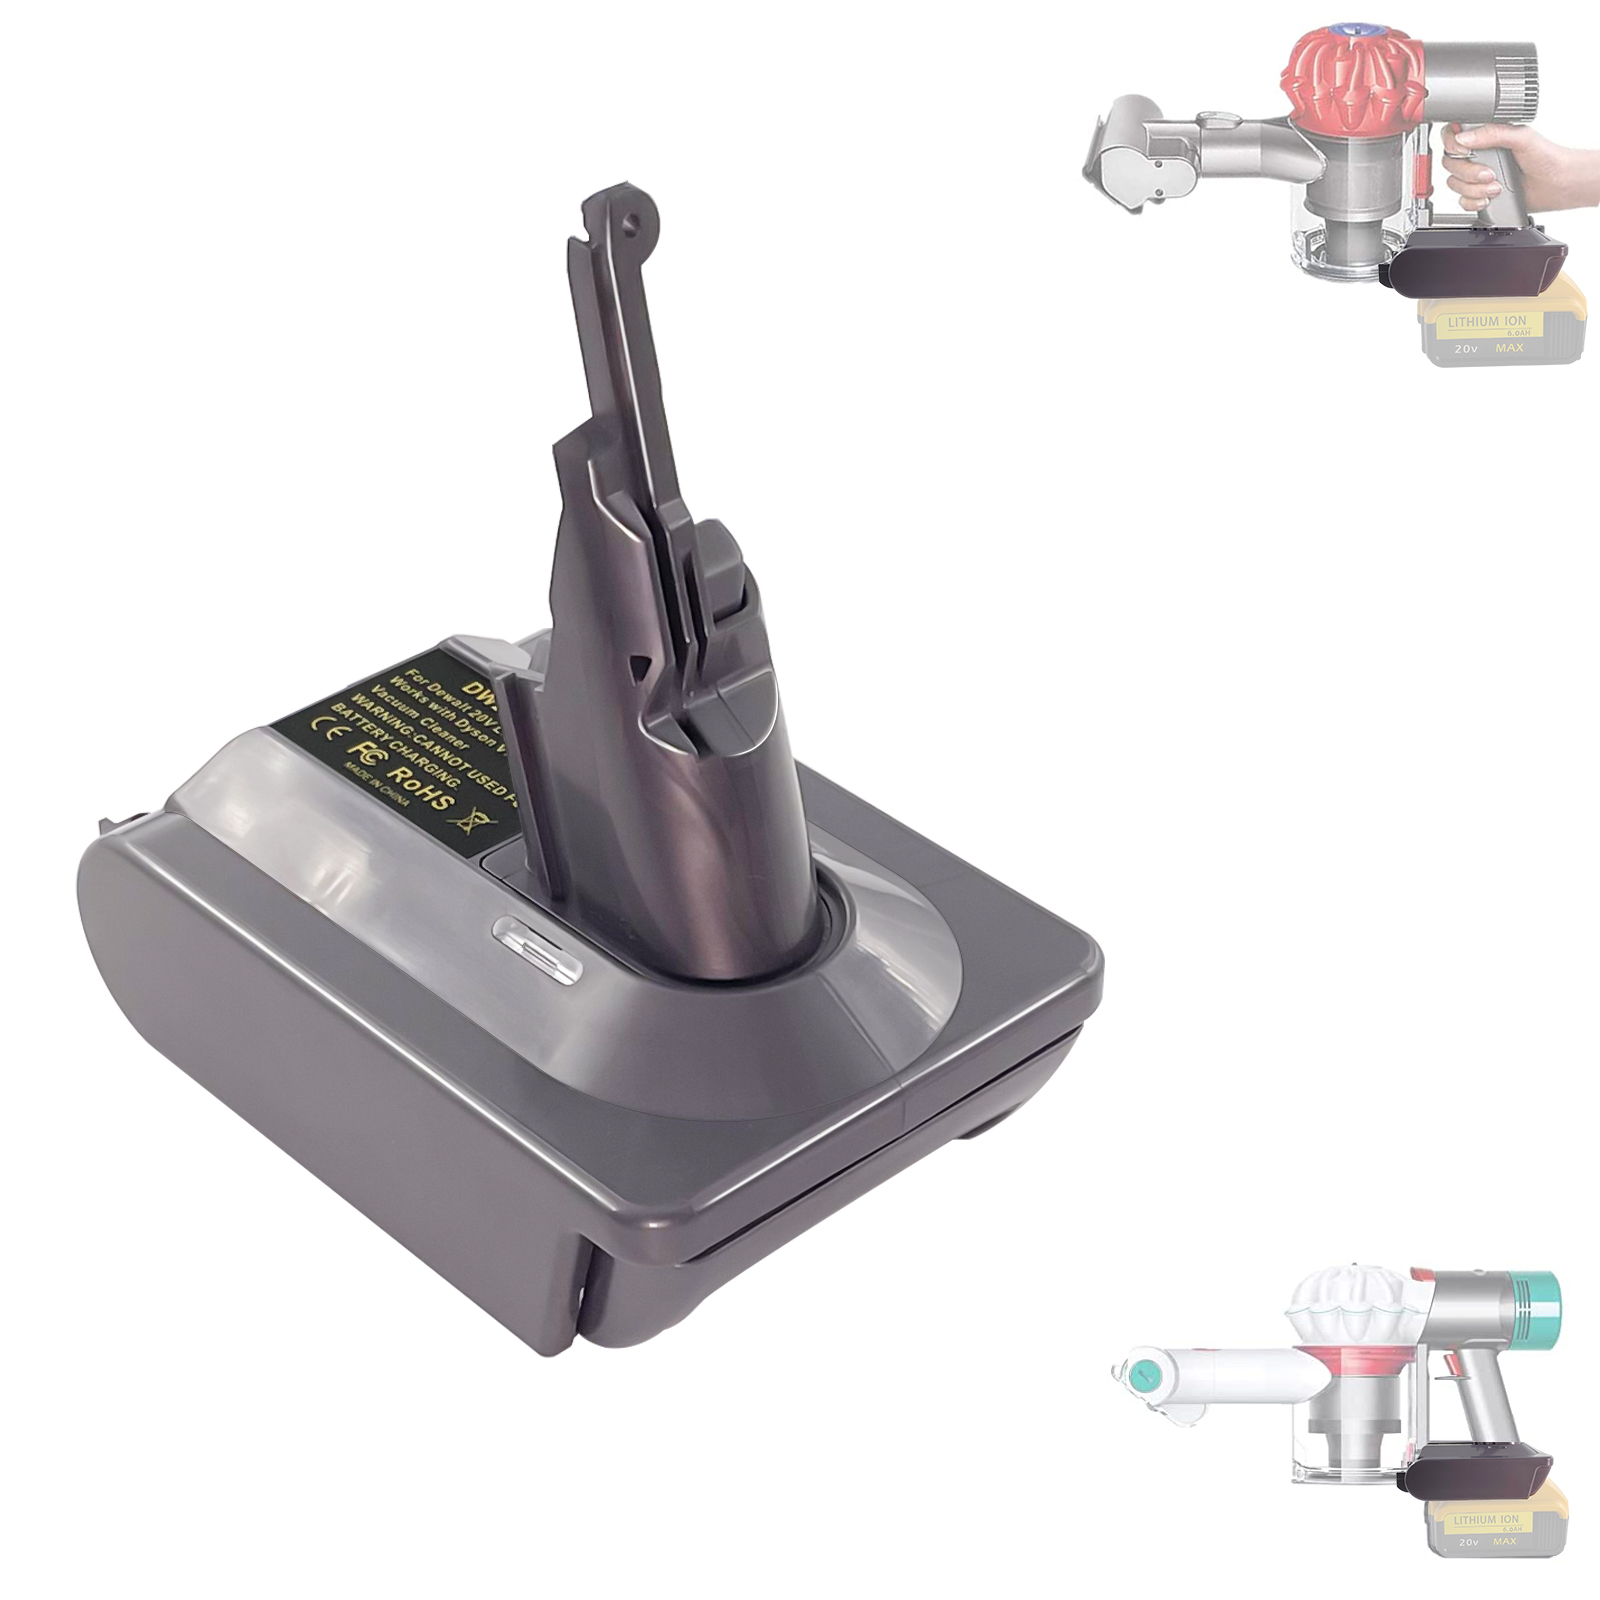 Adaptor Batré Dewalt 20V pikeun Dyson V7/V8 Vacuum Cleaner/Sweeper